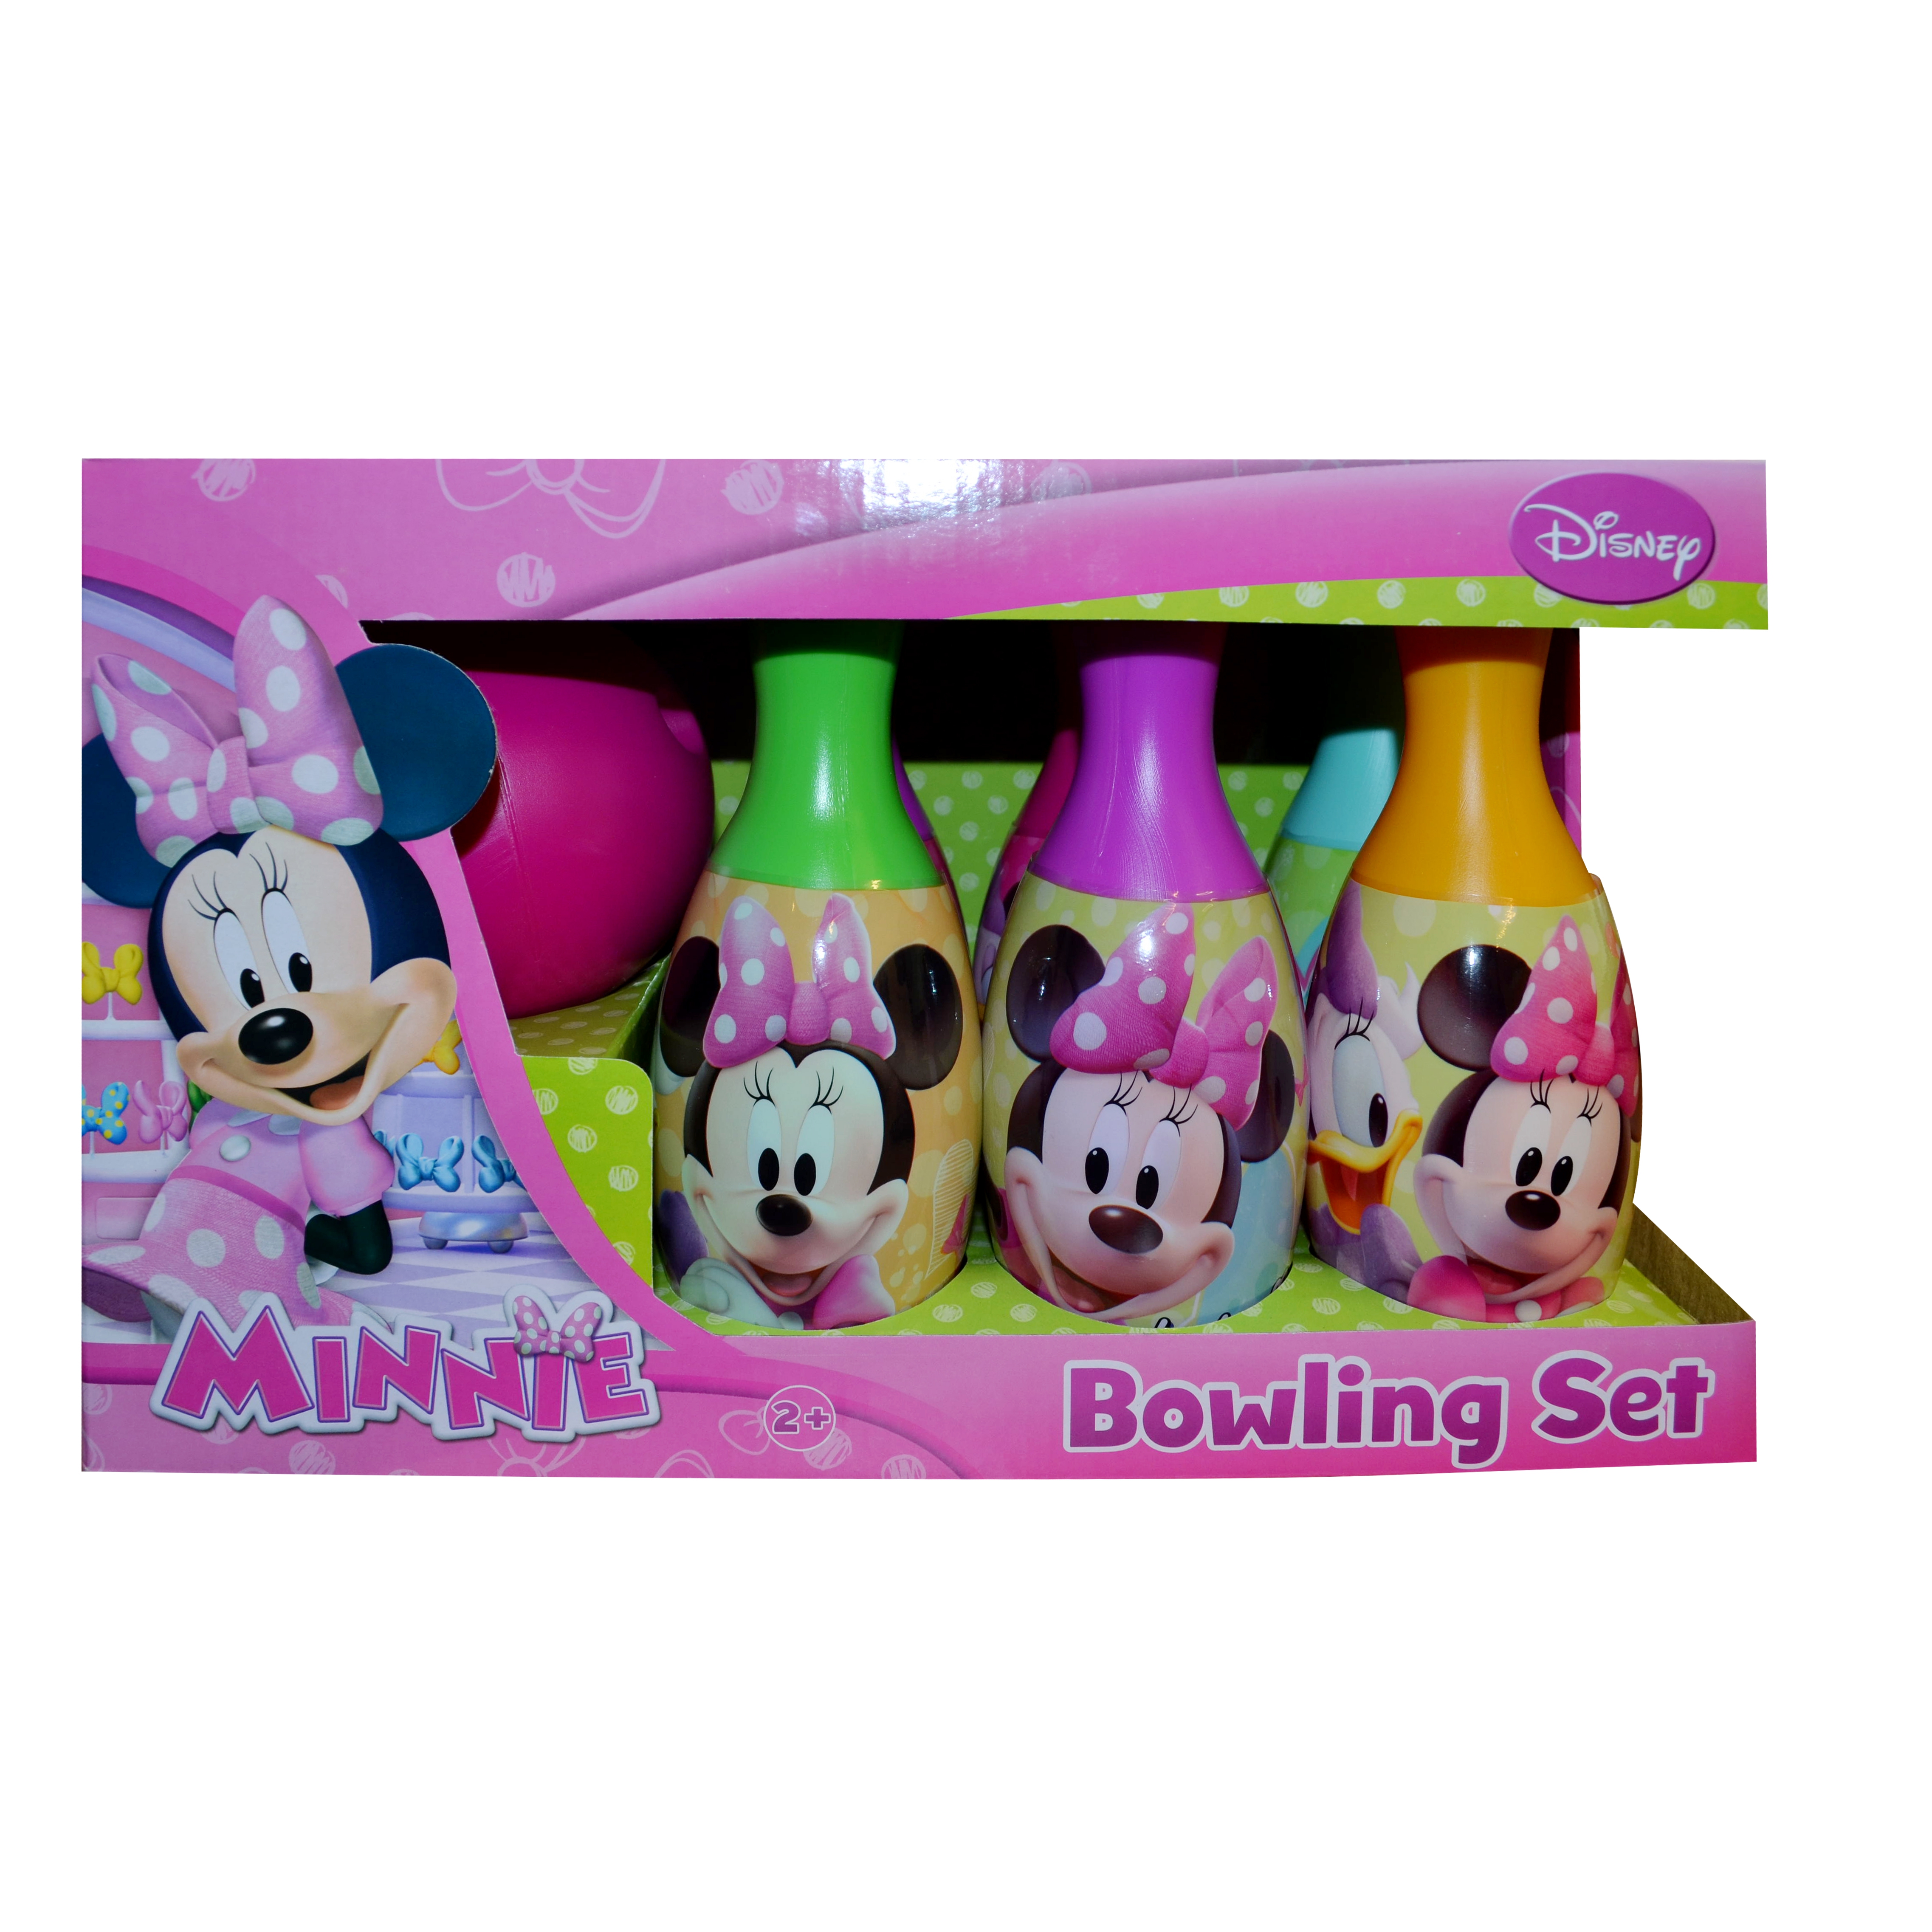 Disney Minnie Mouse 'Pretty' 7 Piece Bowling Set Toy